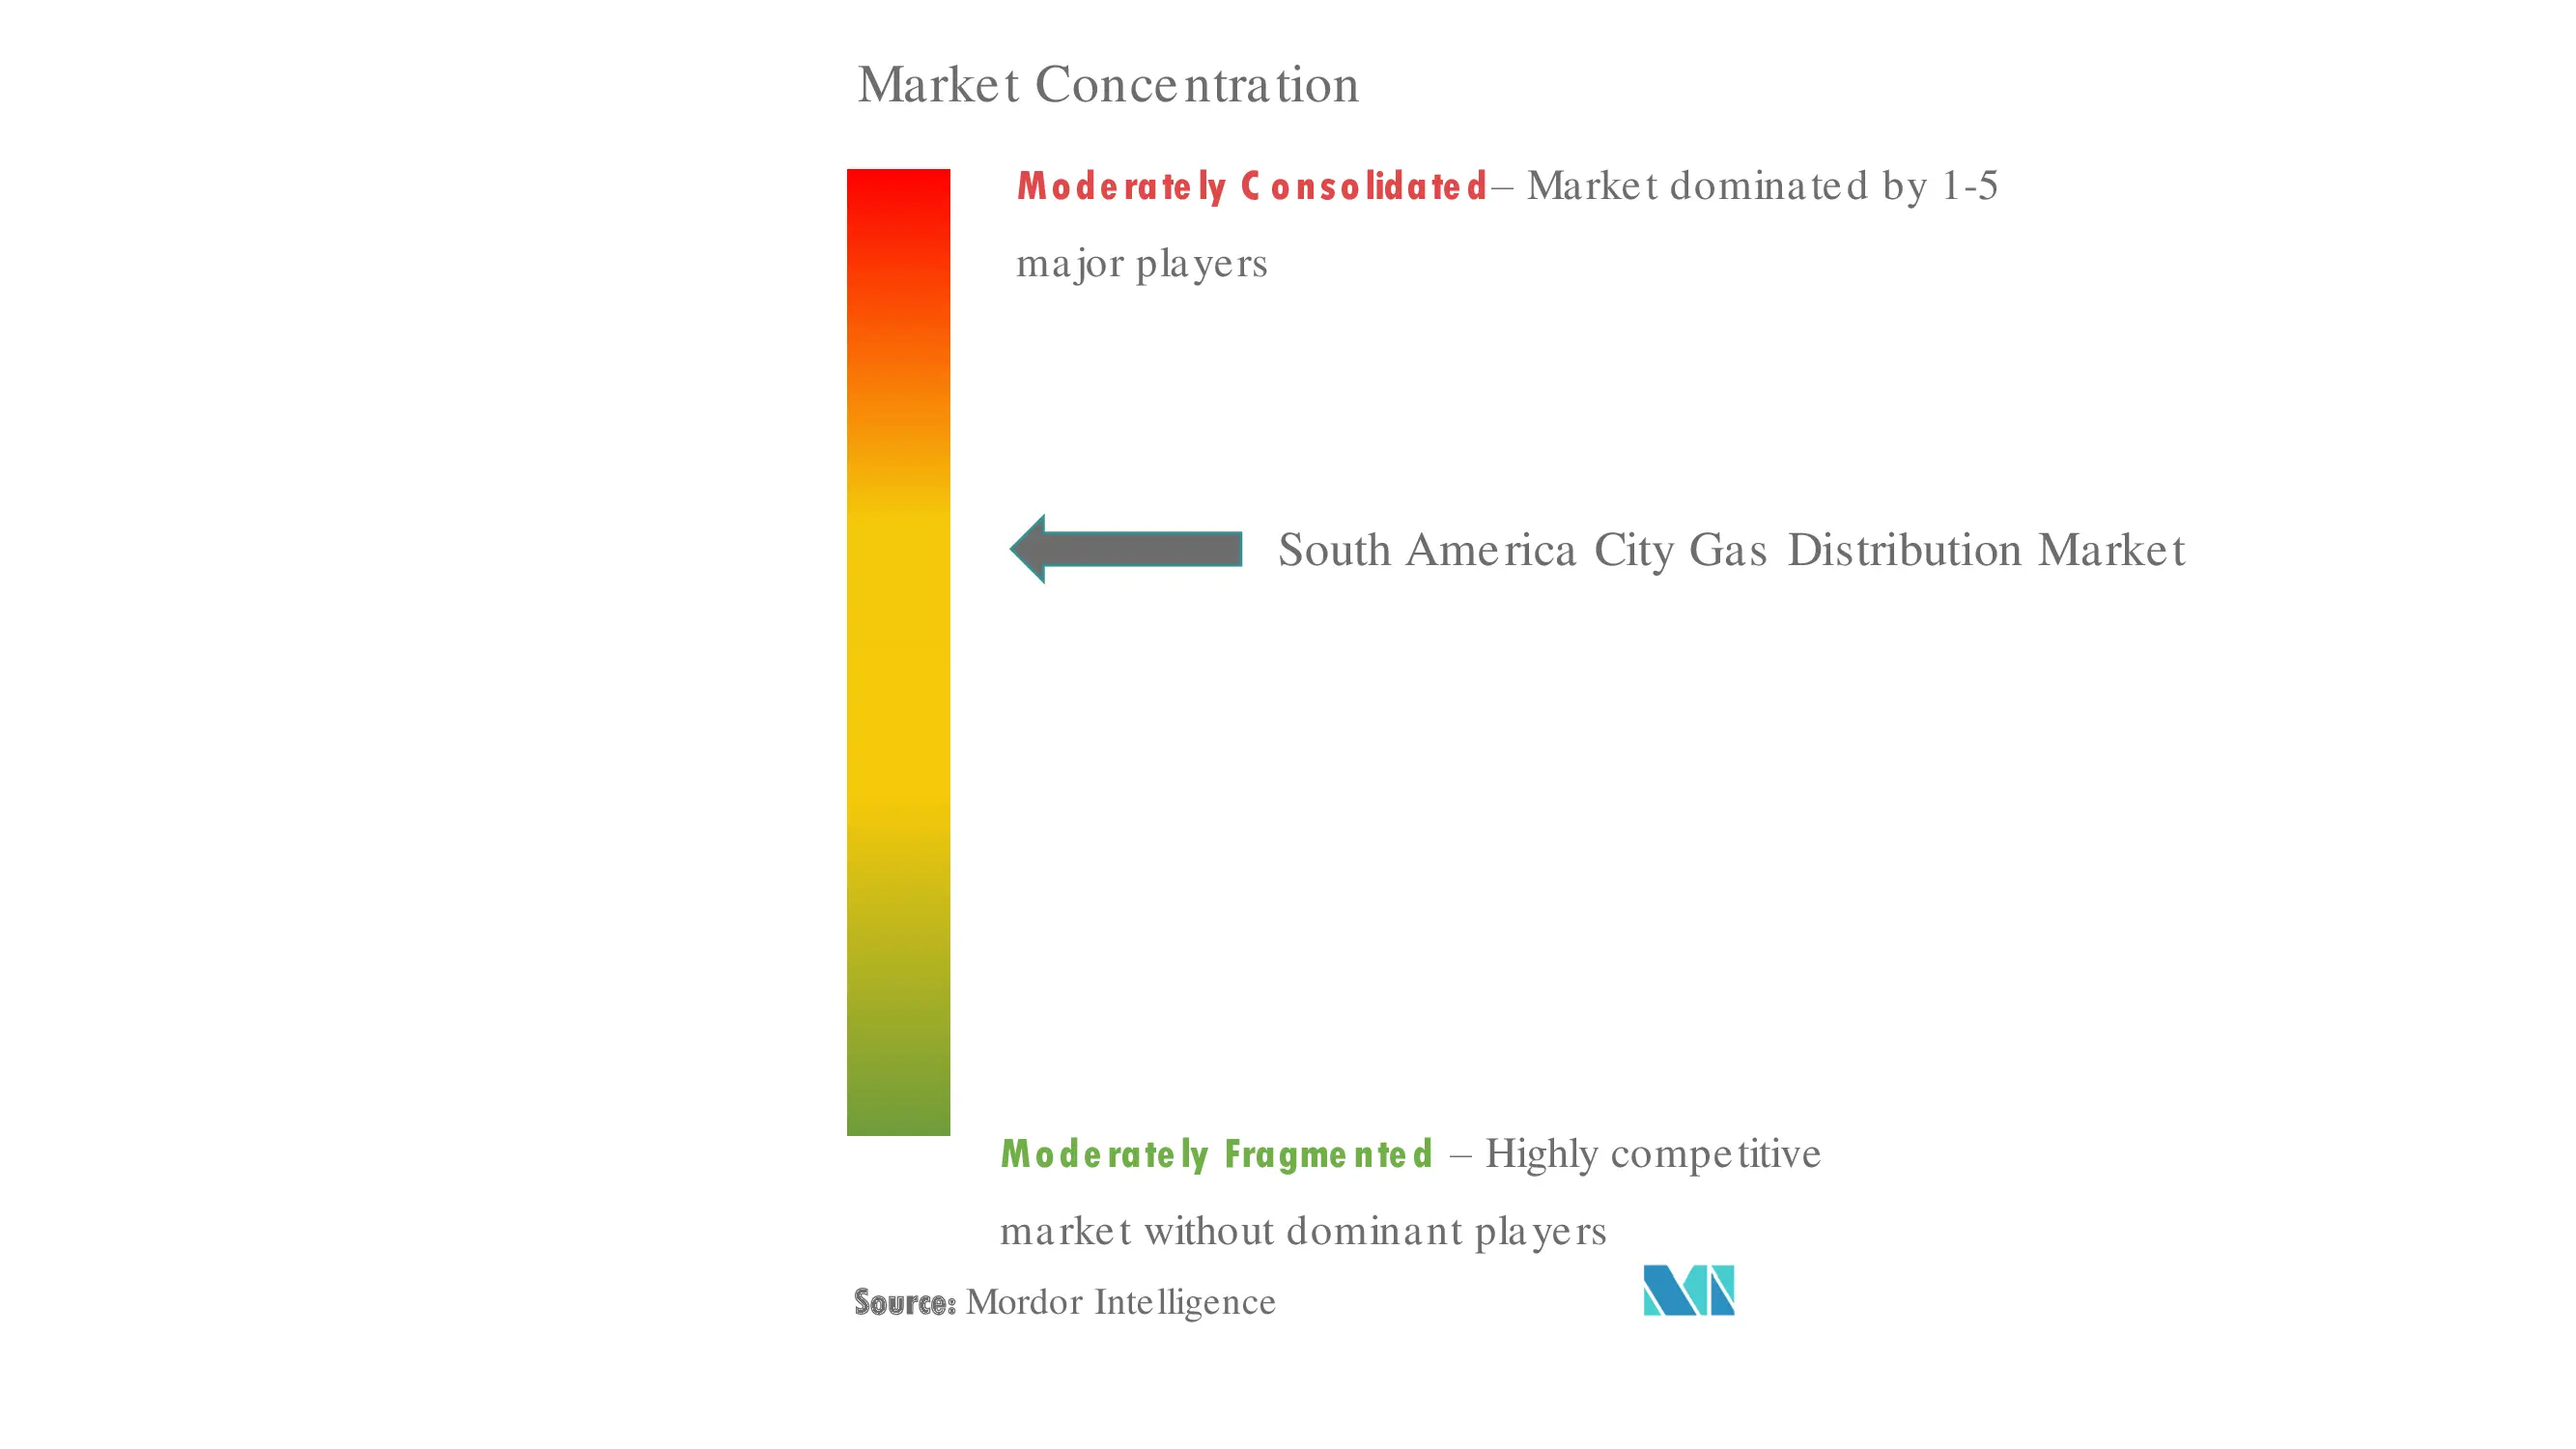 South America City Gas Distribution Market Concentration